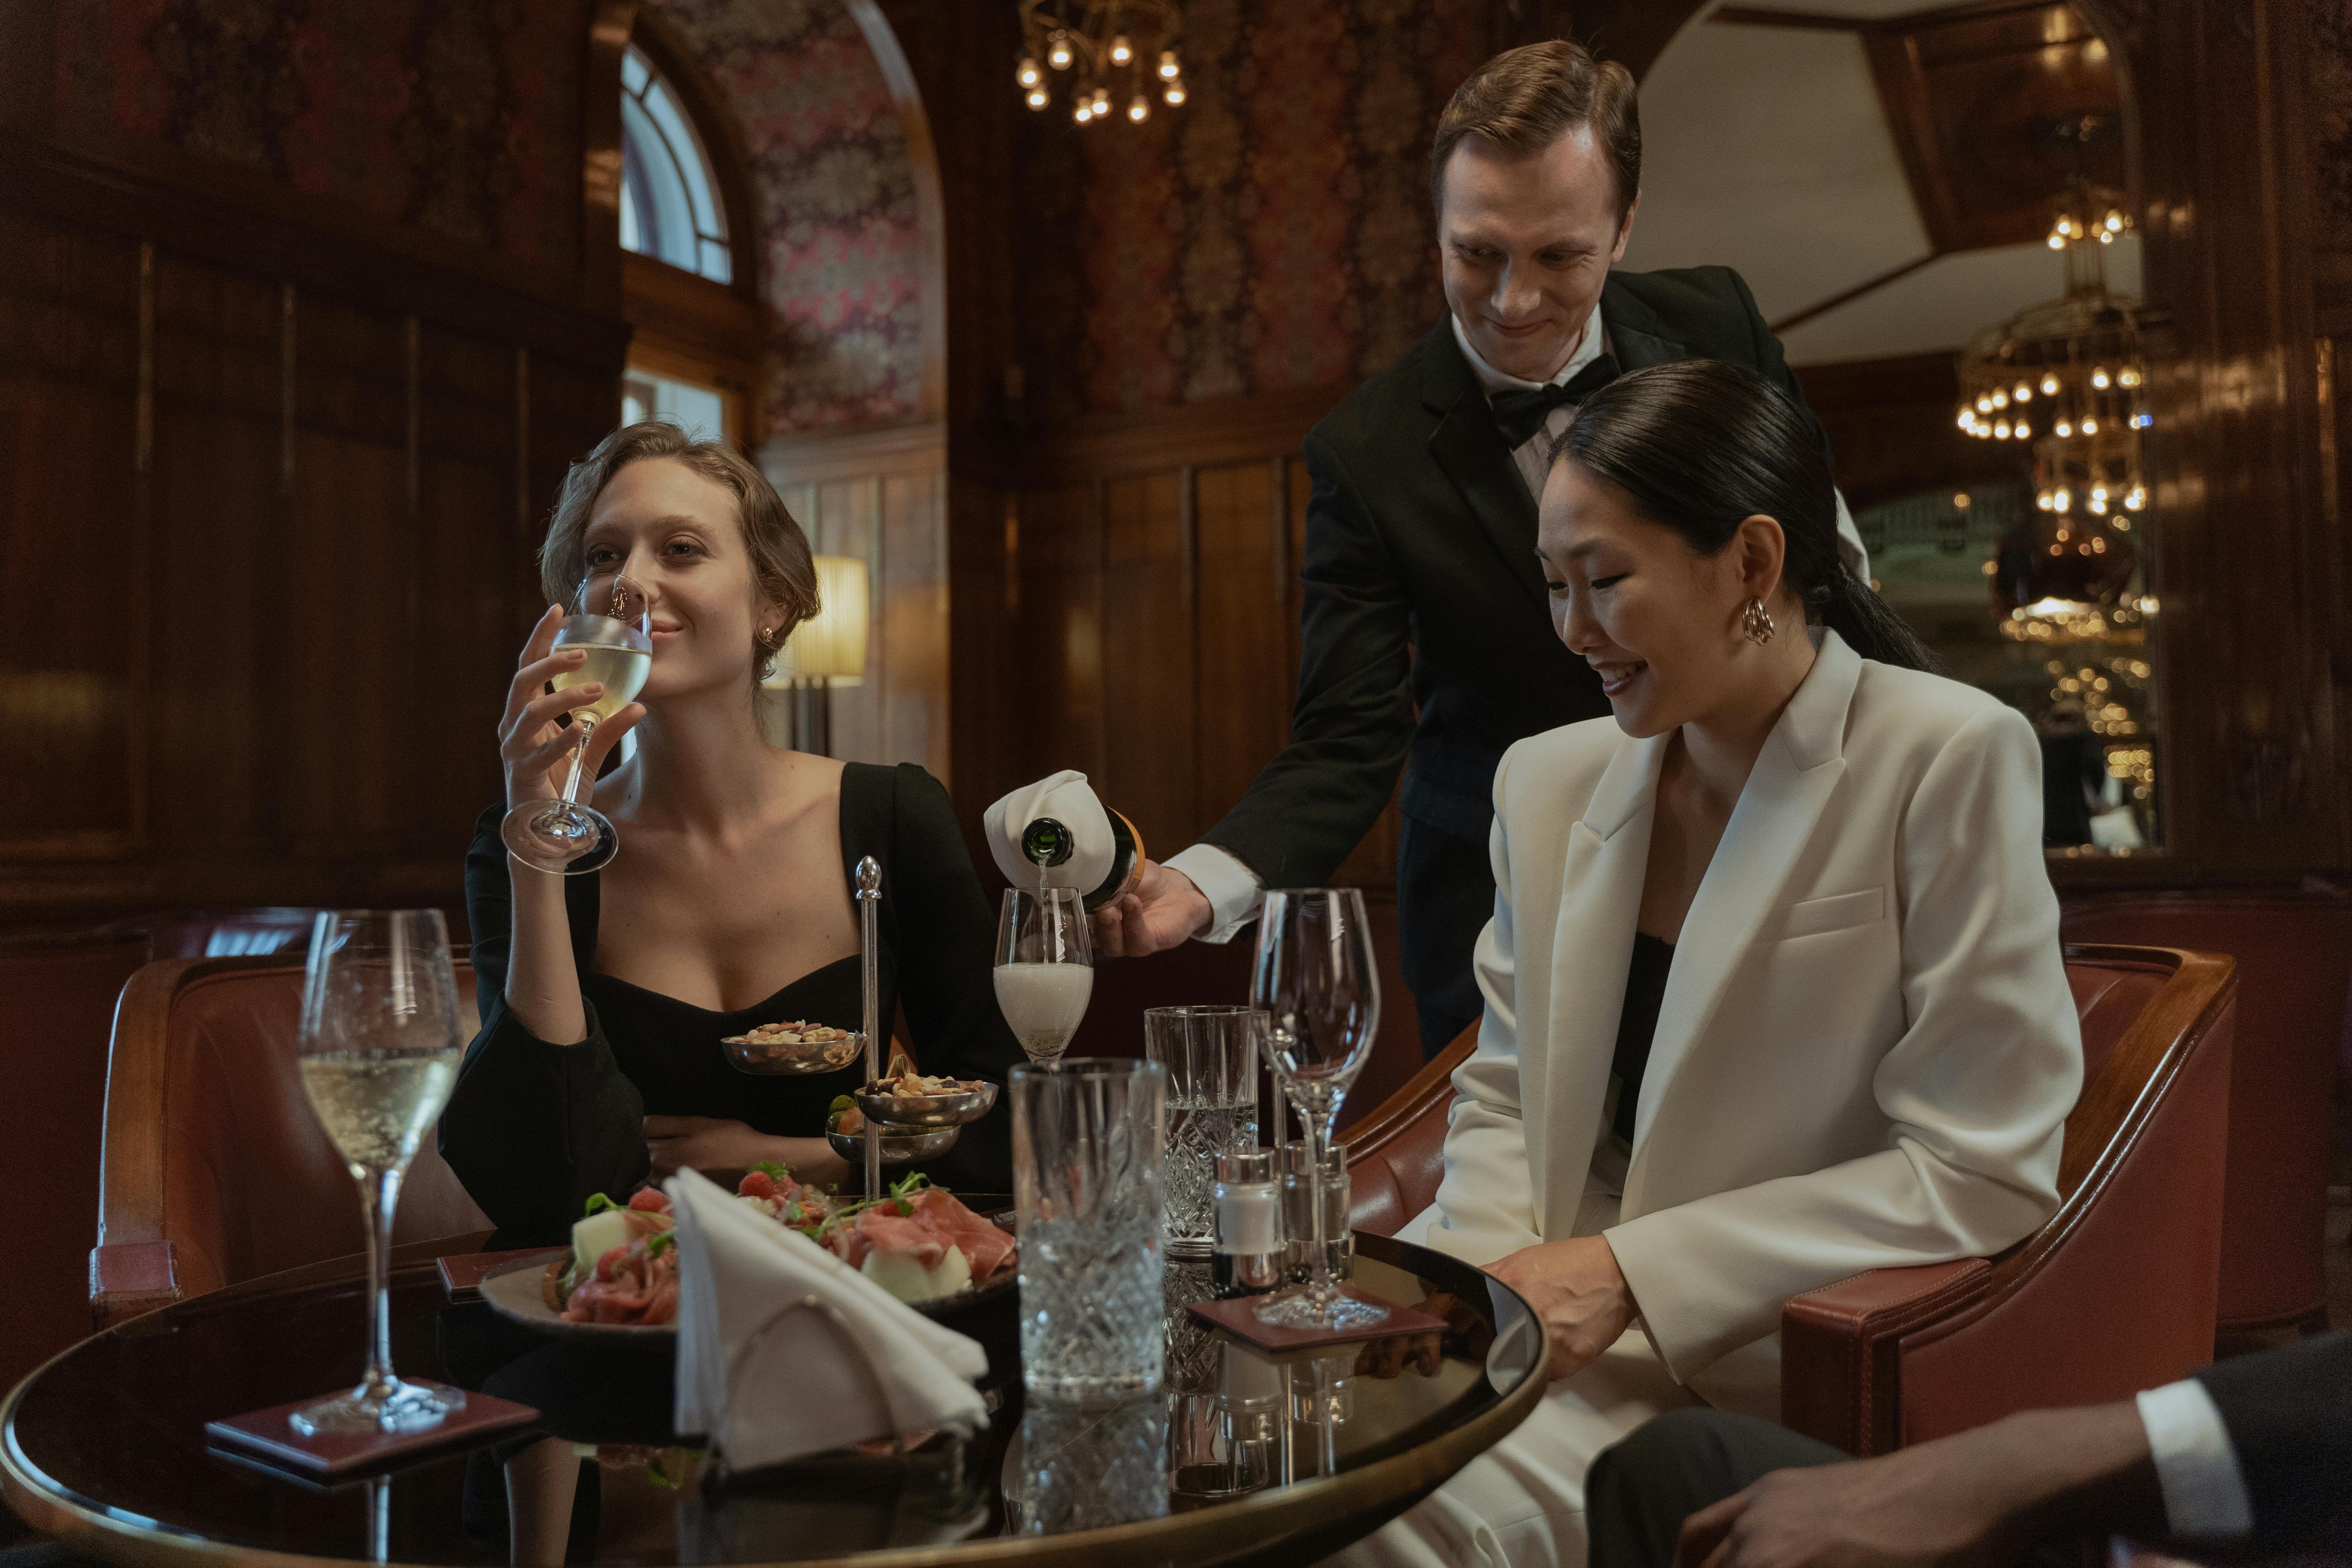 Women enjoying drinks while a waiter serves them | Source: Pexels